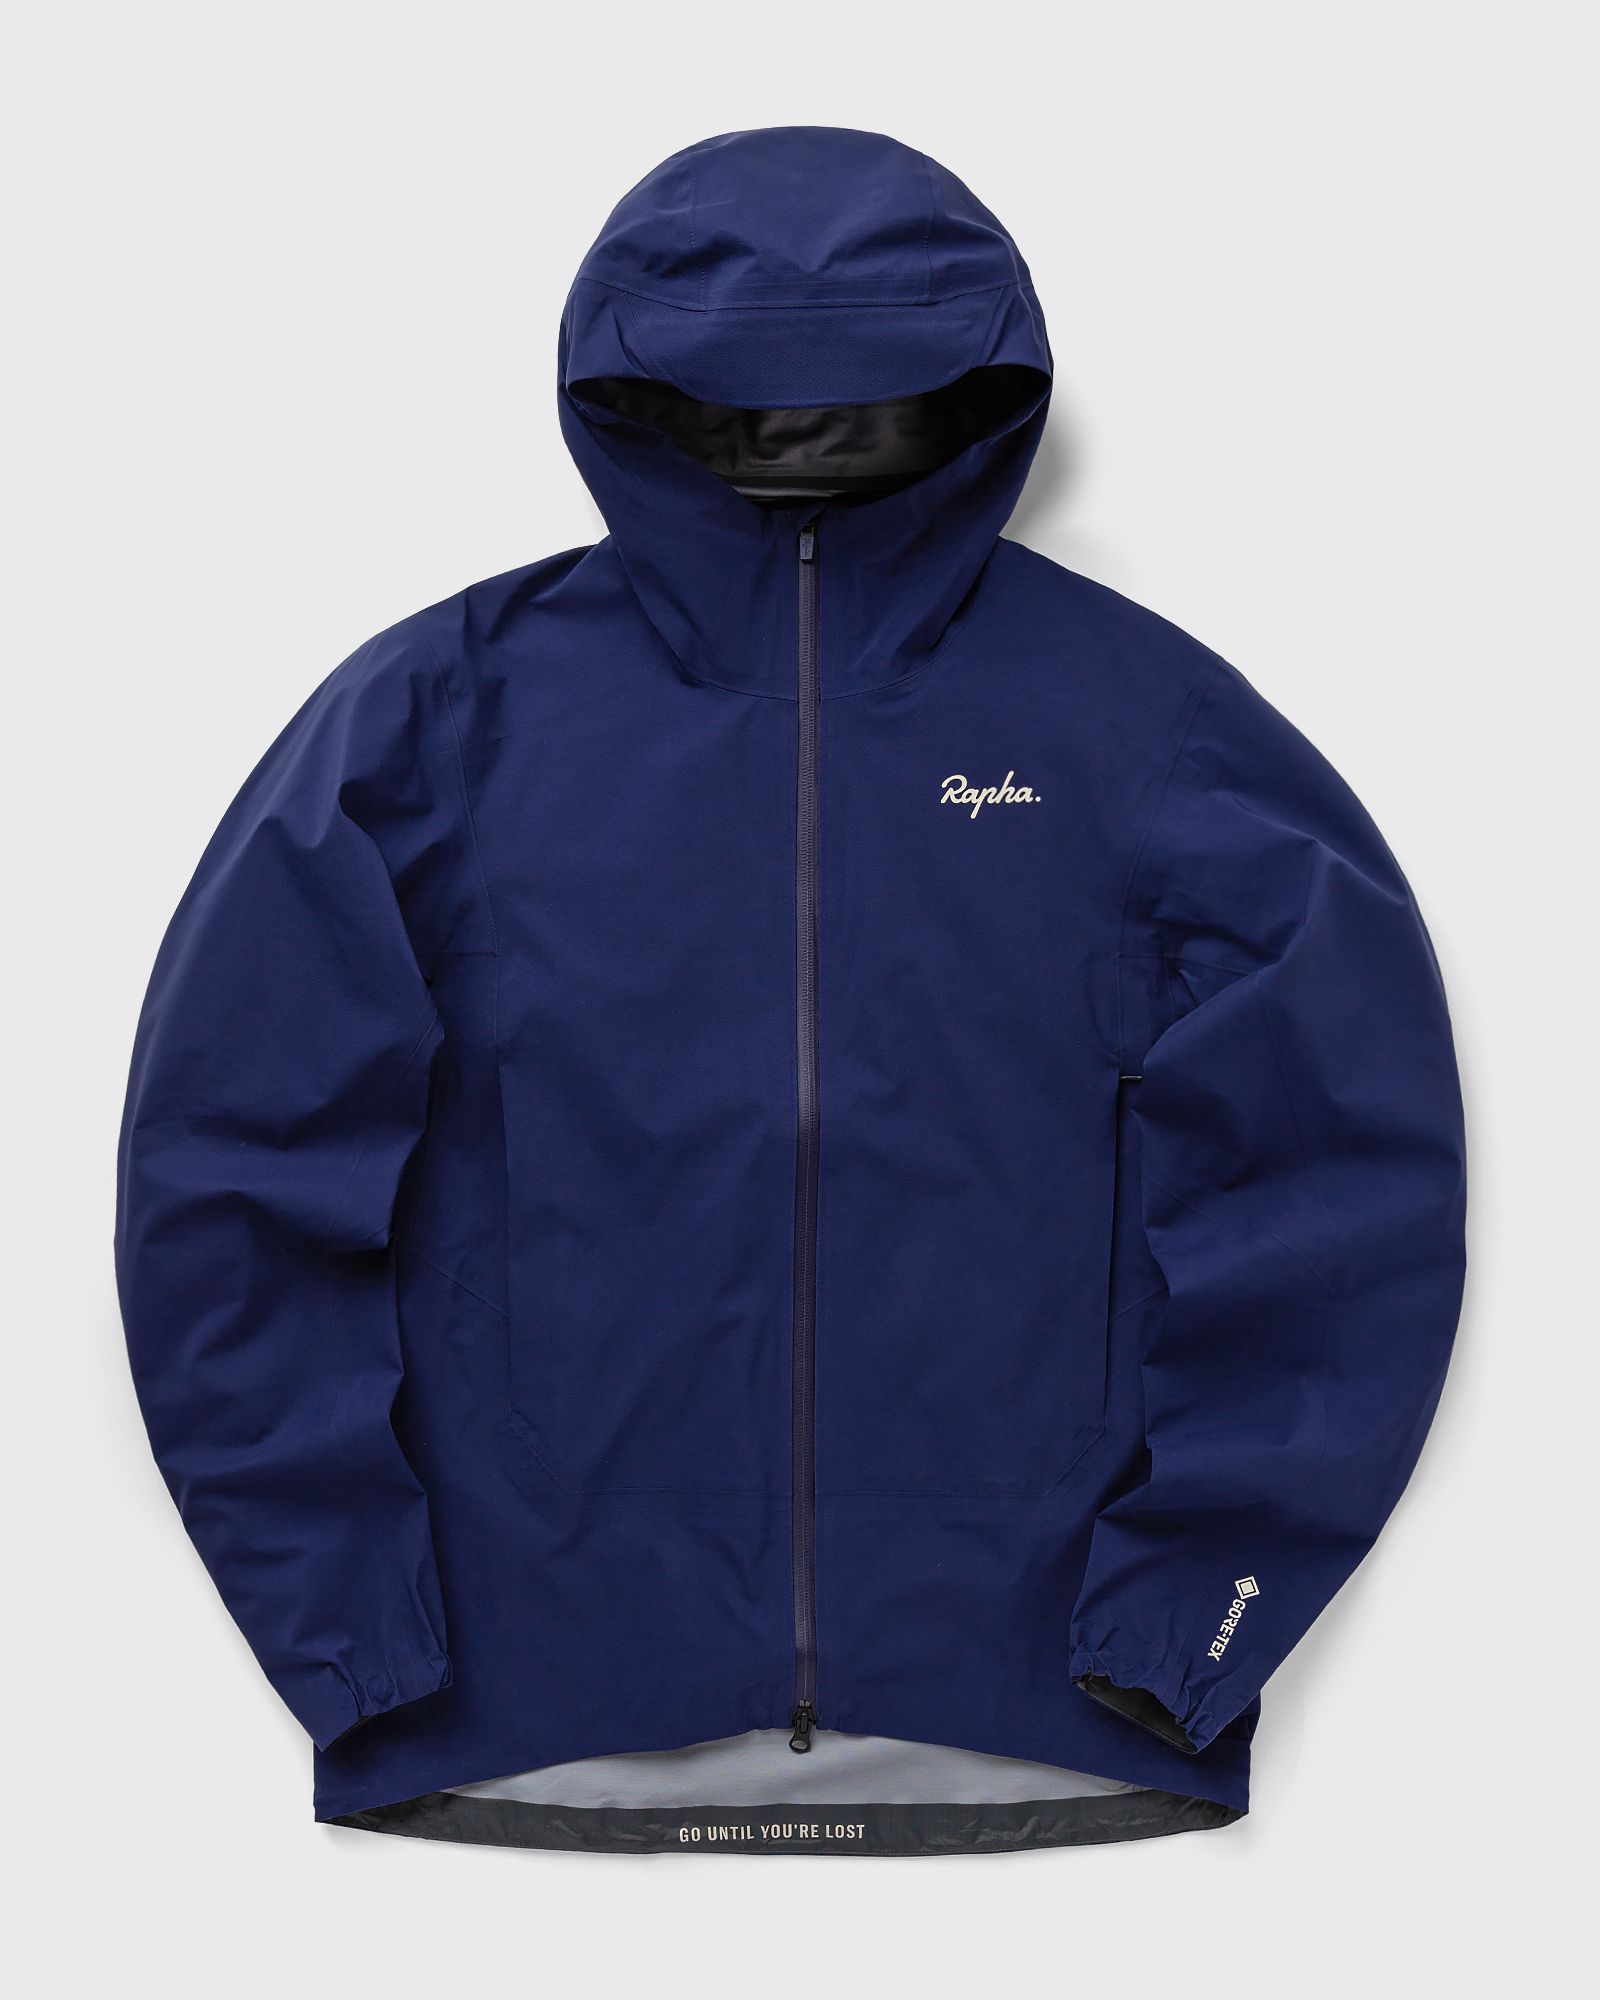 Rapha - explore gore-tex jacket men shell jackets blue in größe:xxl